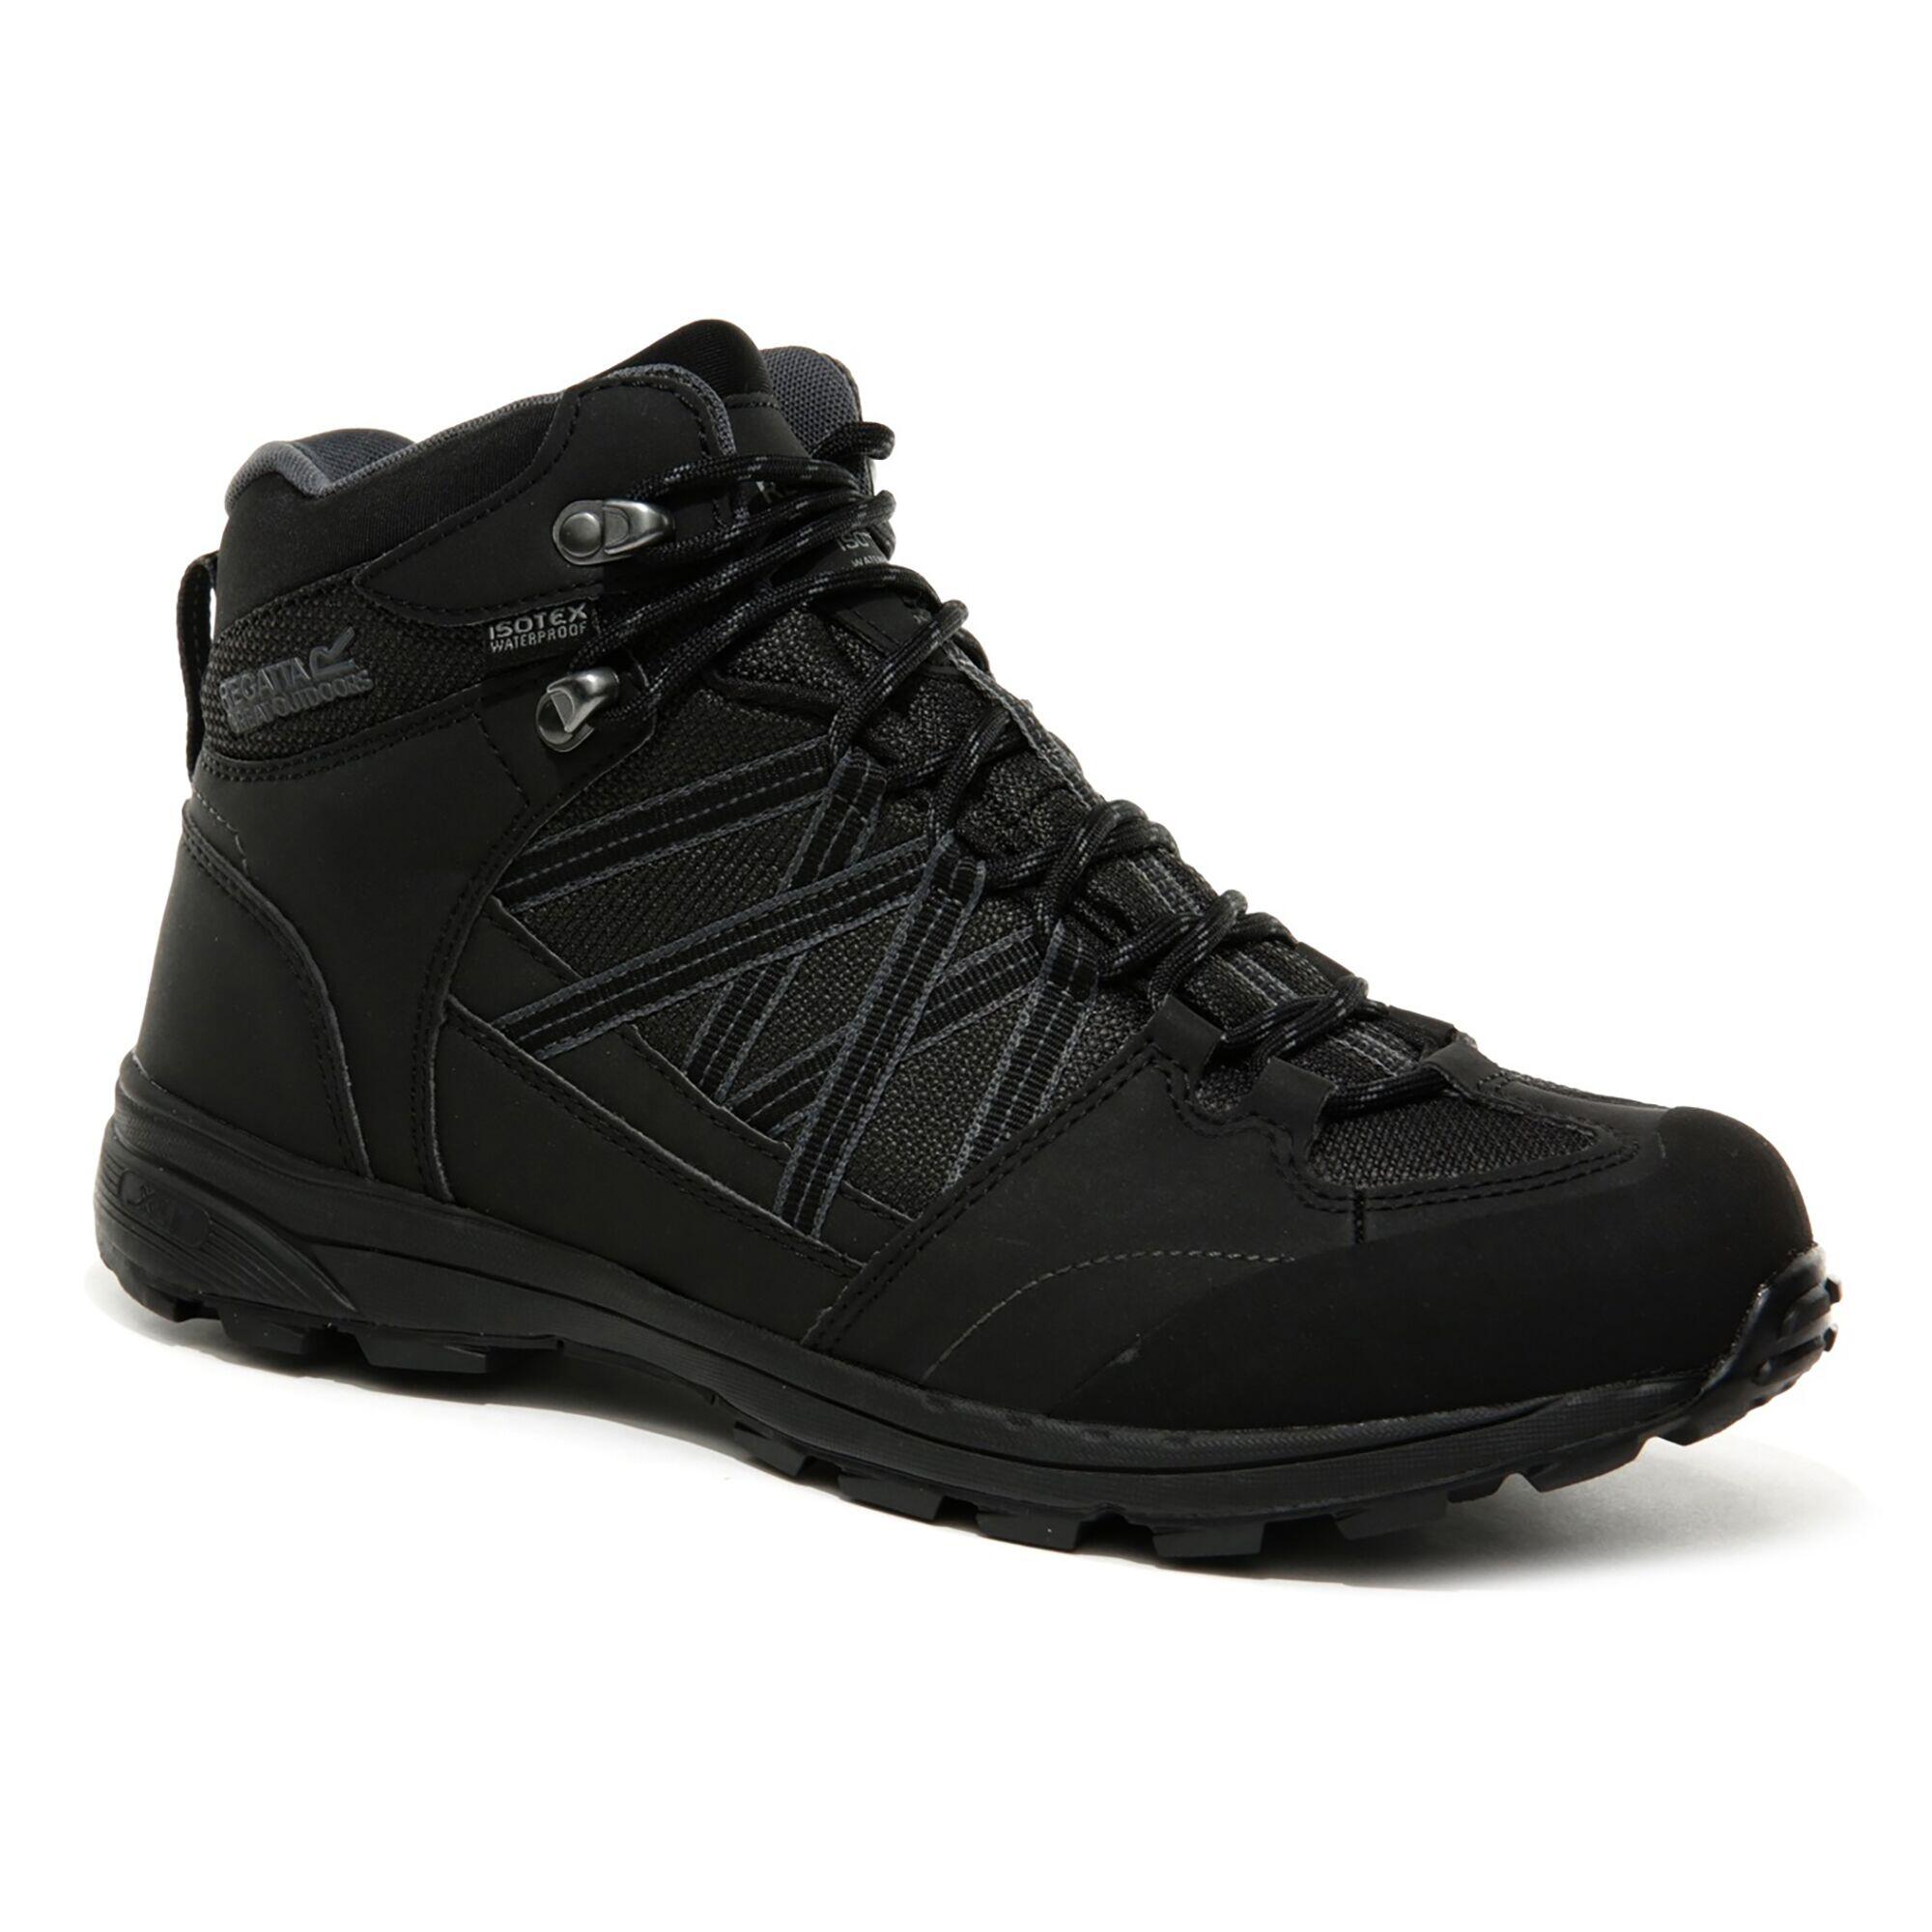 REGATTA Samaris II Men's Hiking Boots - Black/Grey